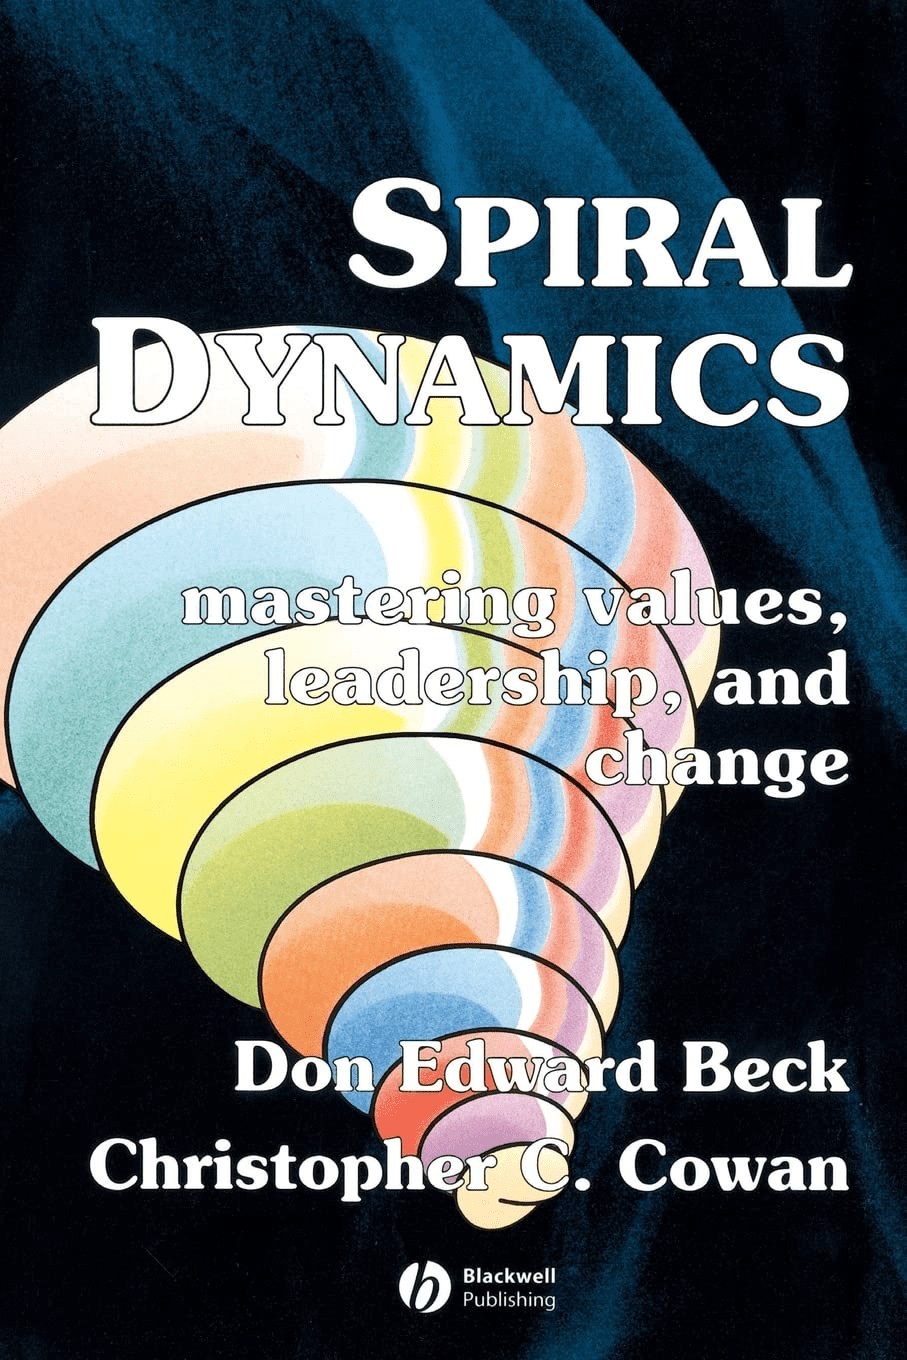 Spiral Dynamics by Don Edward Beck